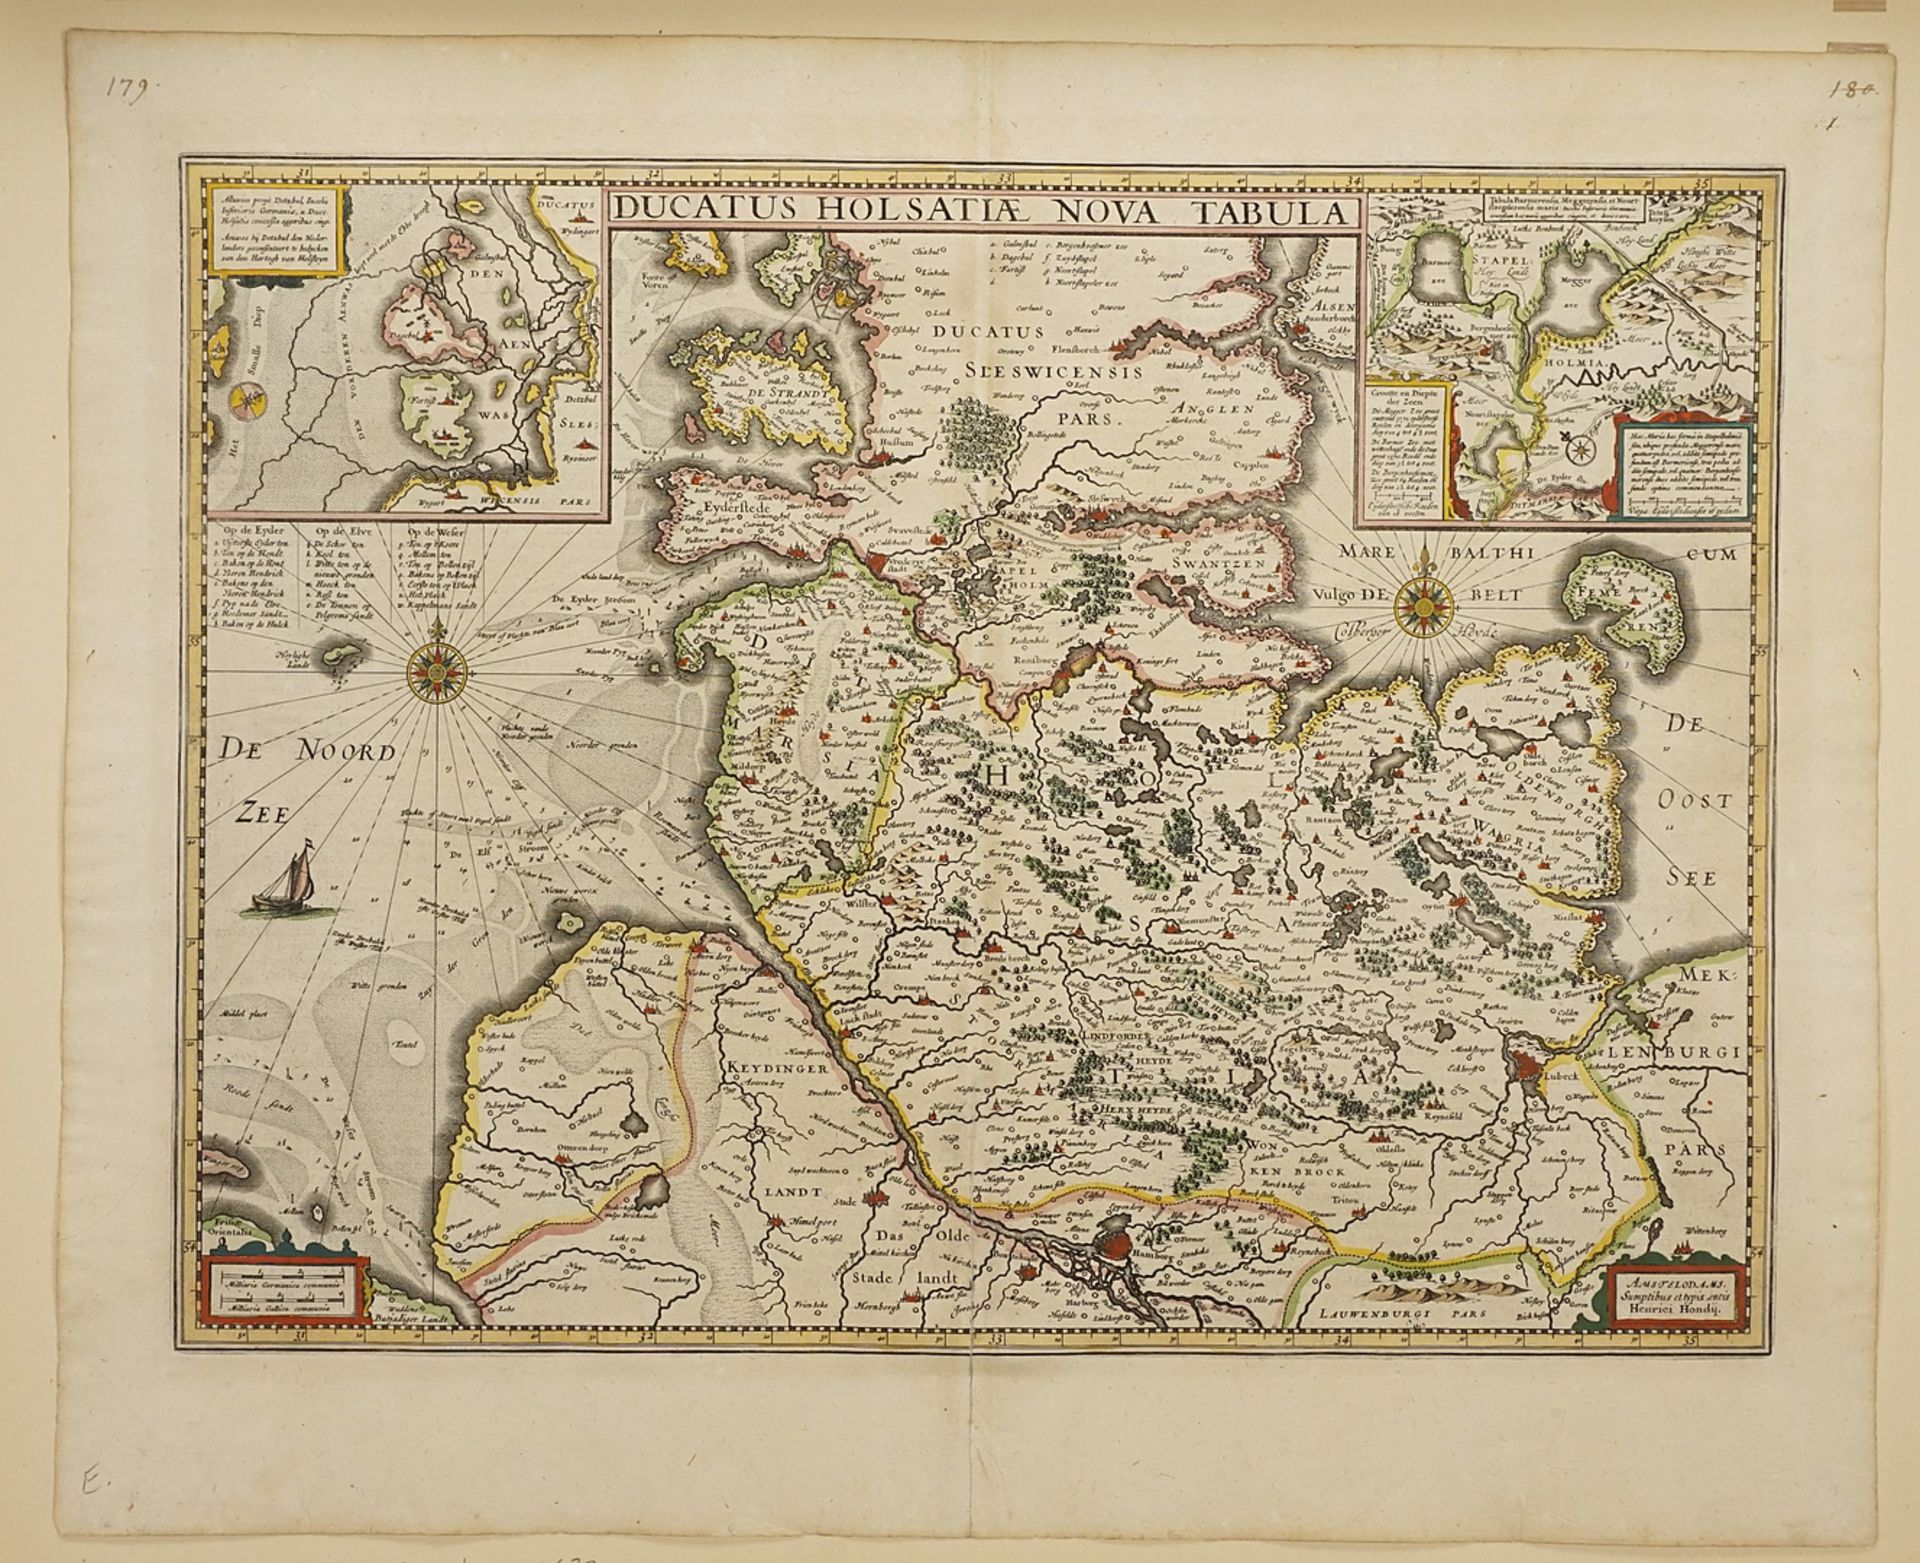 Henricus Hondius (1597-1651), "Ducatus Holsatiae nova tabula" (New Map of the Duchy of Holstein) - Image 3 of 4